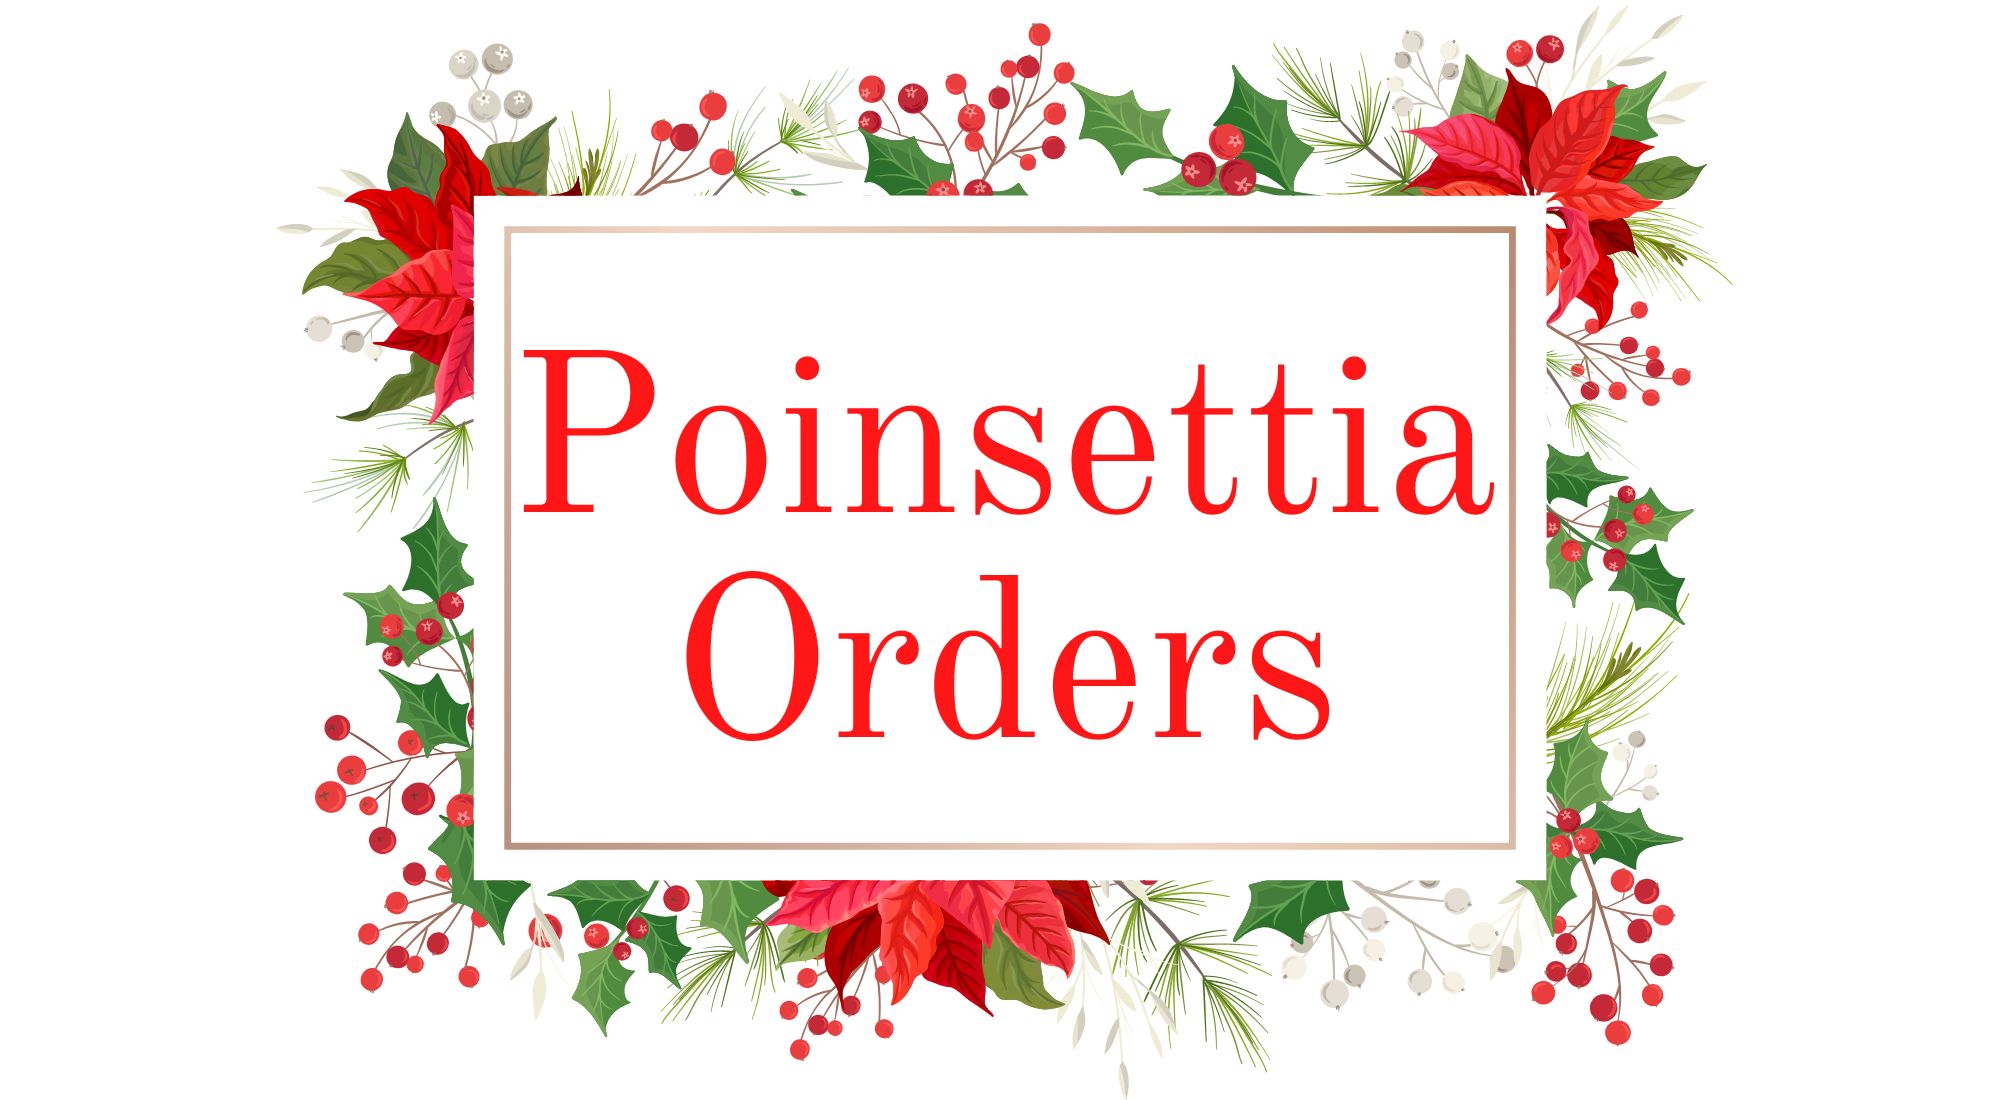 Poinsettia_Orders_Header_2.jpg